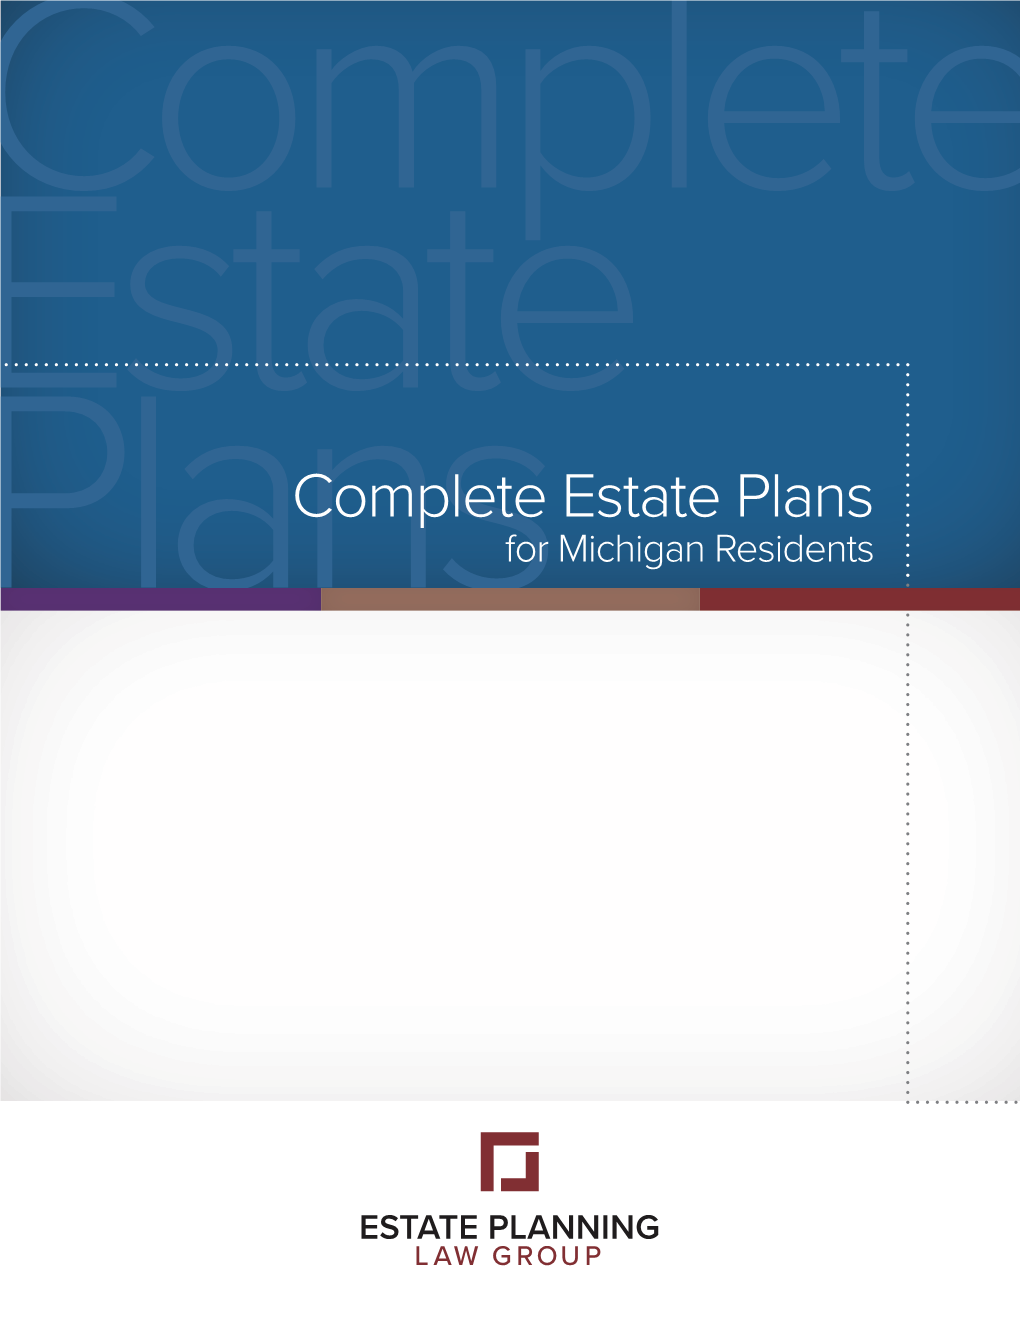 Complete Estate Plans for Michigan Residents 1 Methods of Estate Distribution Complete2-3 Types of Complete Estate Plans